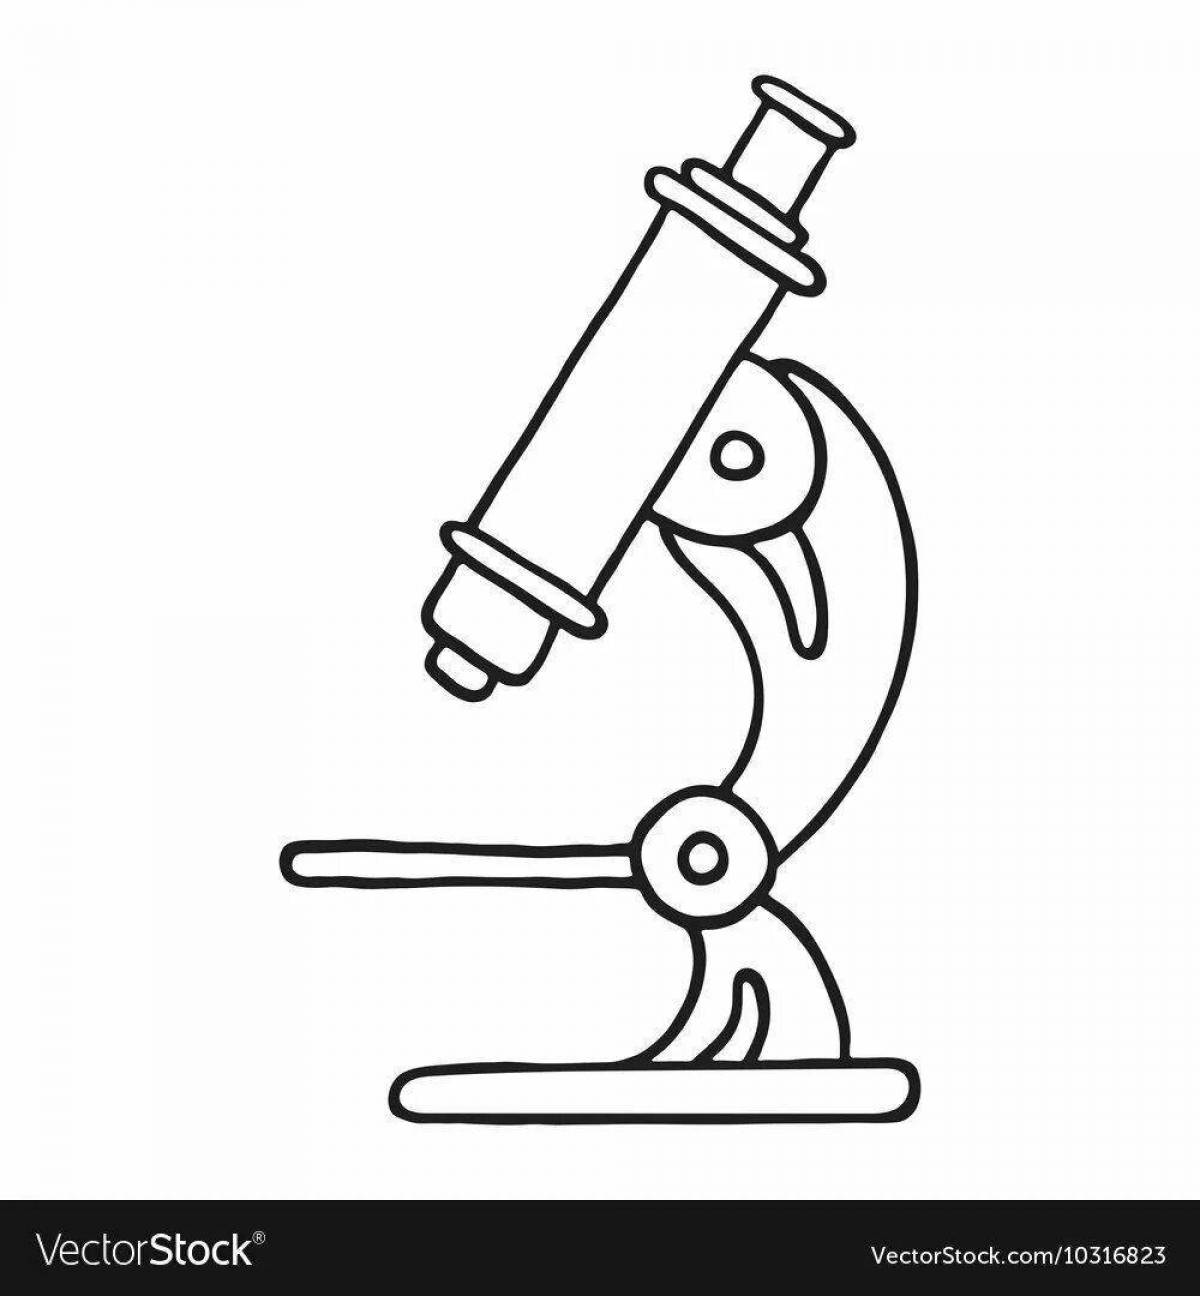 Child microscope #6